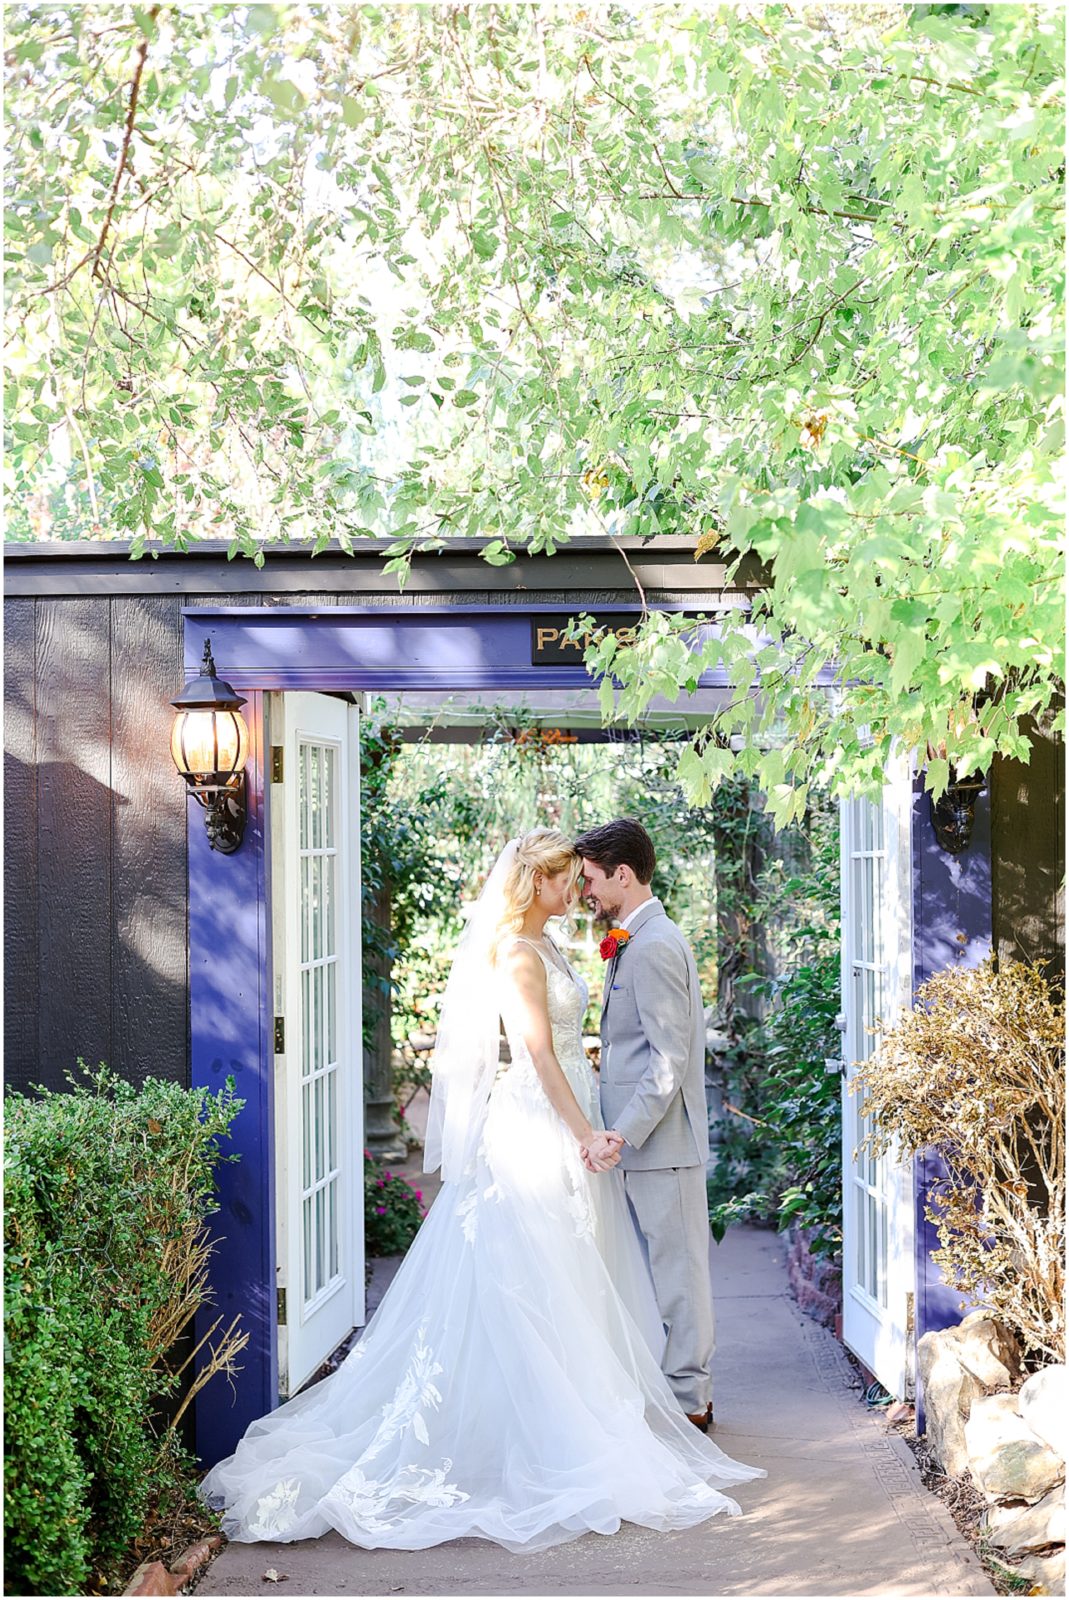 A Secret Garden - Wedding Venue in Independence Missouri - Wedding Photography - KC 